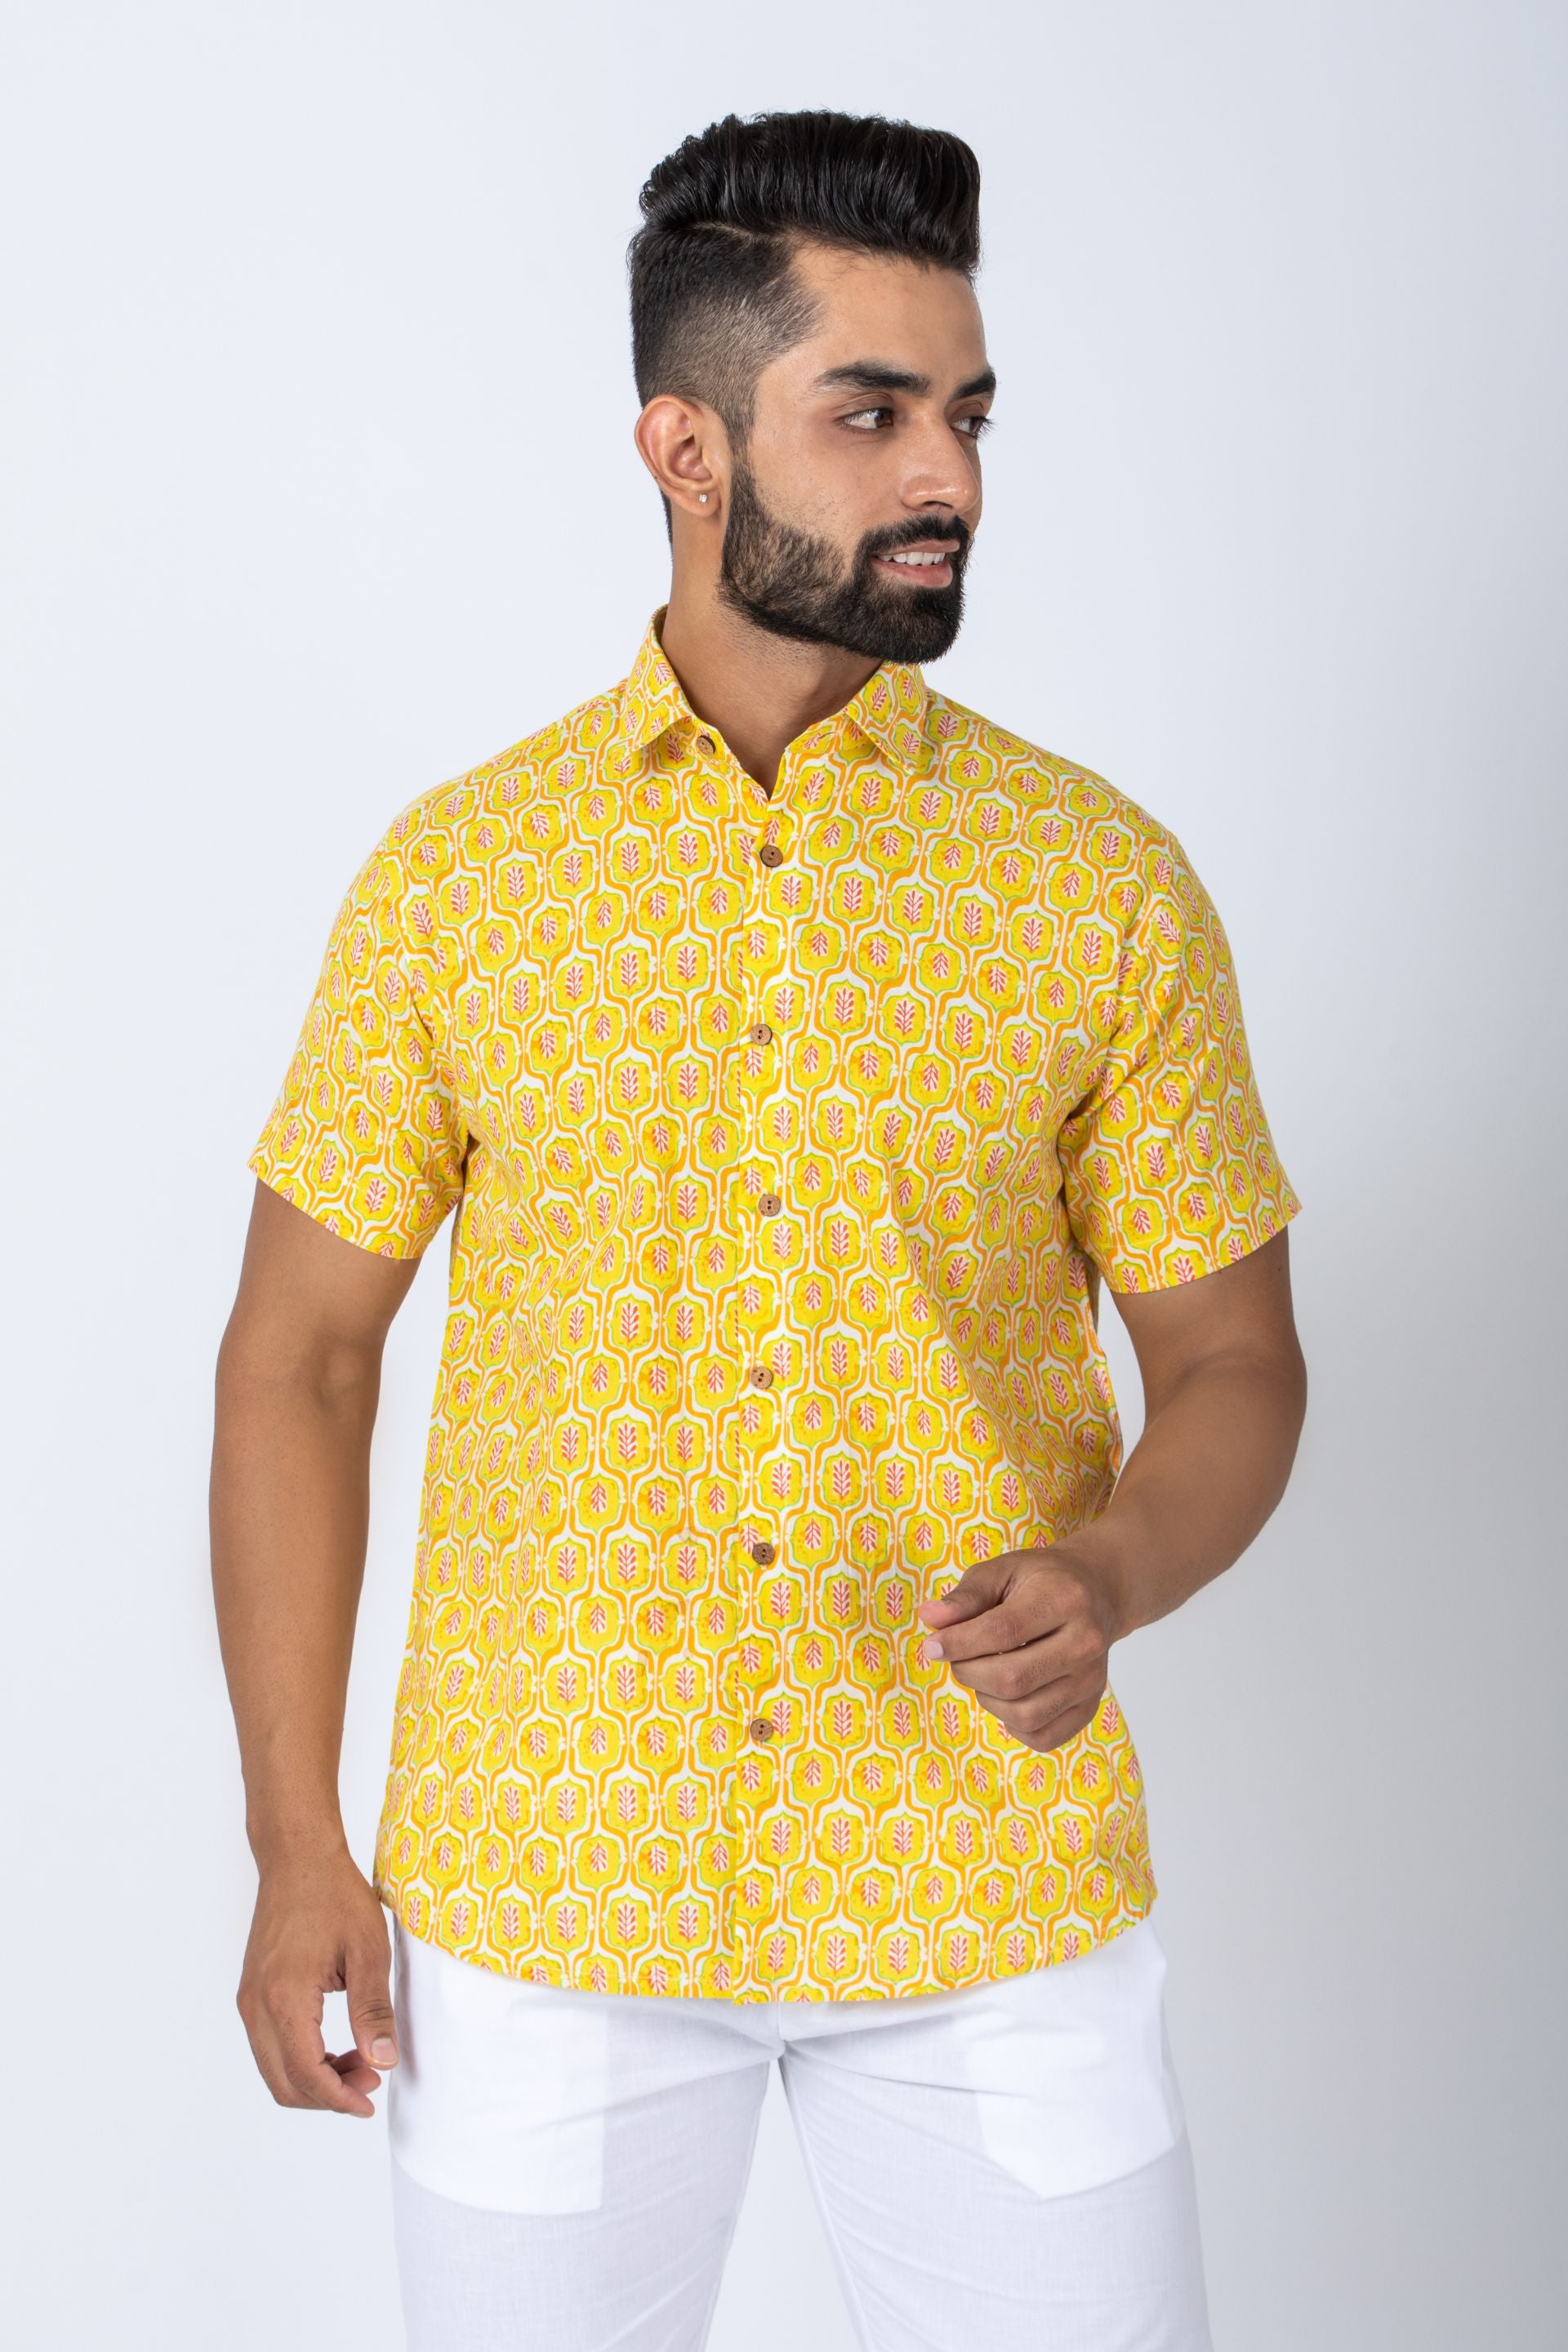 Firangi Yarn Yellow Ethnic Pattern Hand Printed Shirt For Men - Half Sleeves